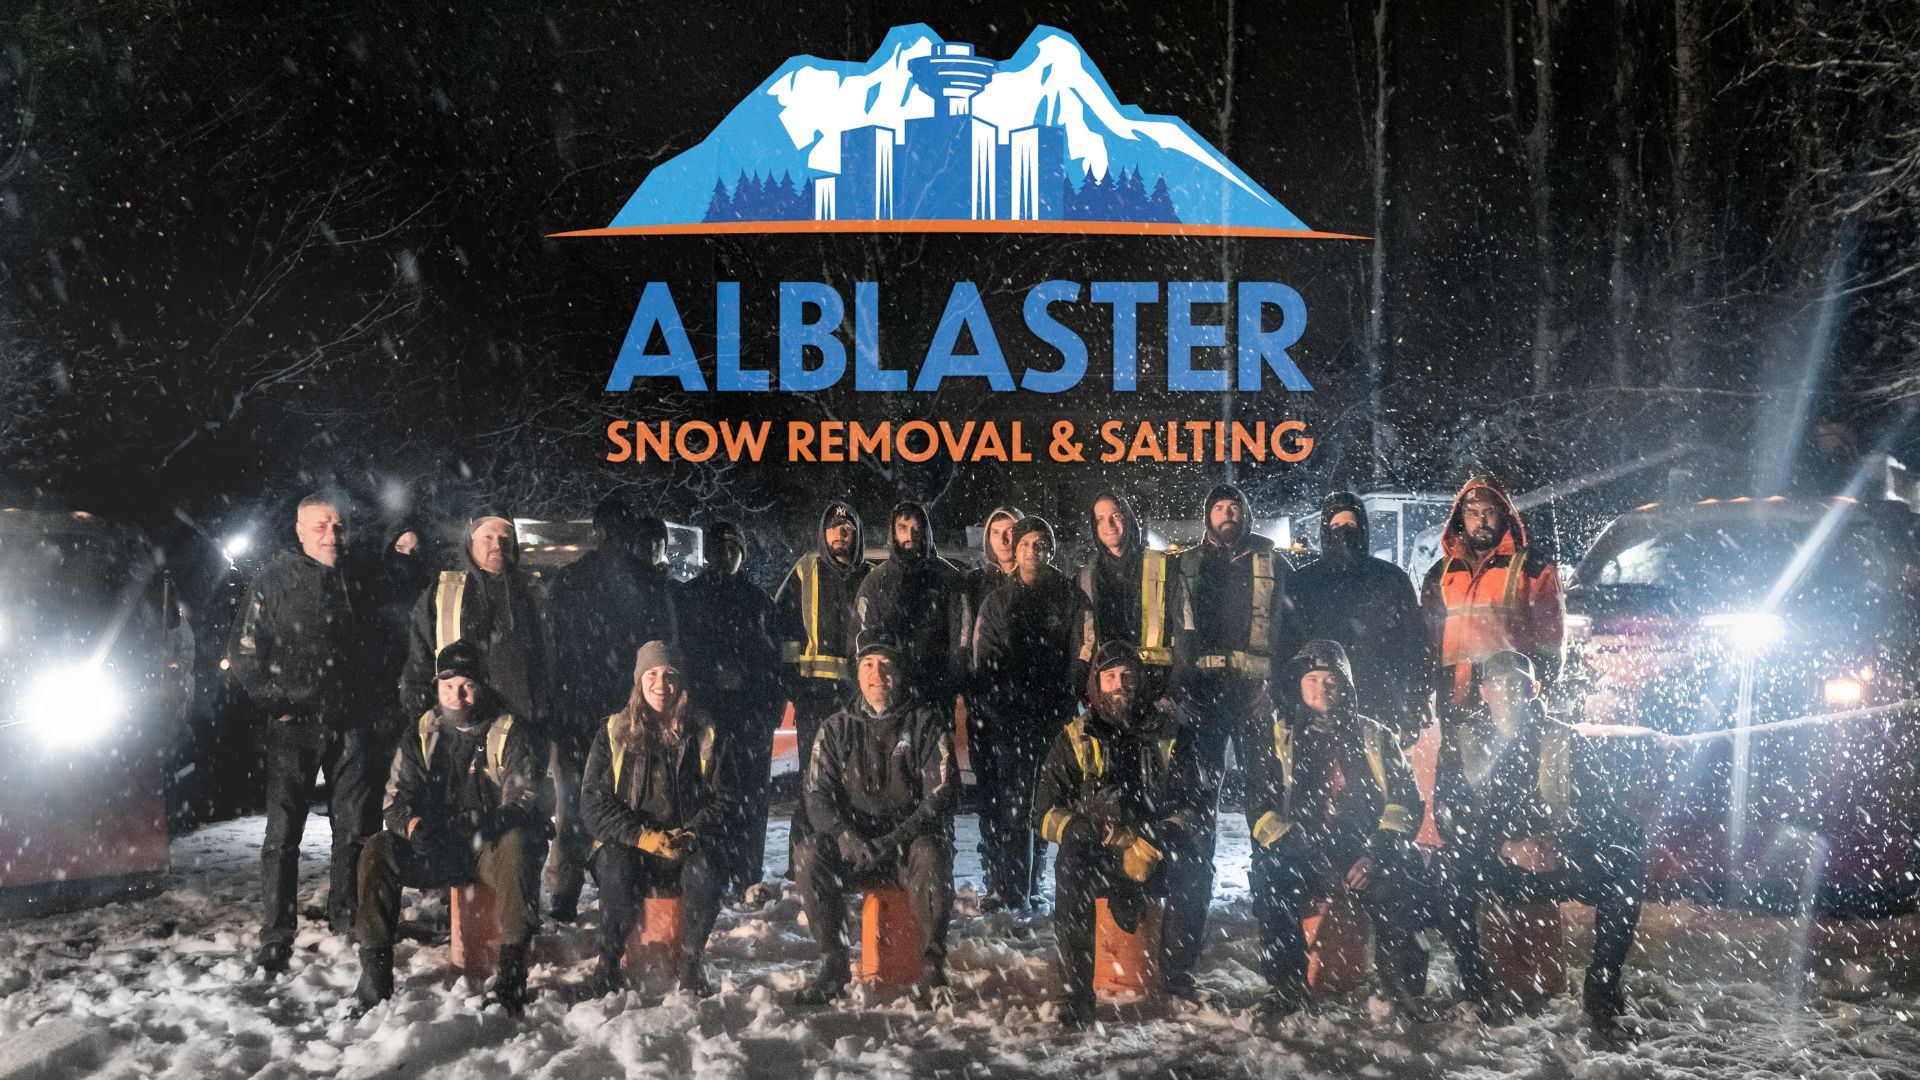 Snow Removal & Salting Vancouver — Alblaster Snow Removal